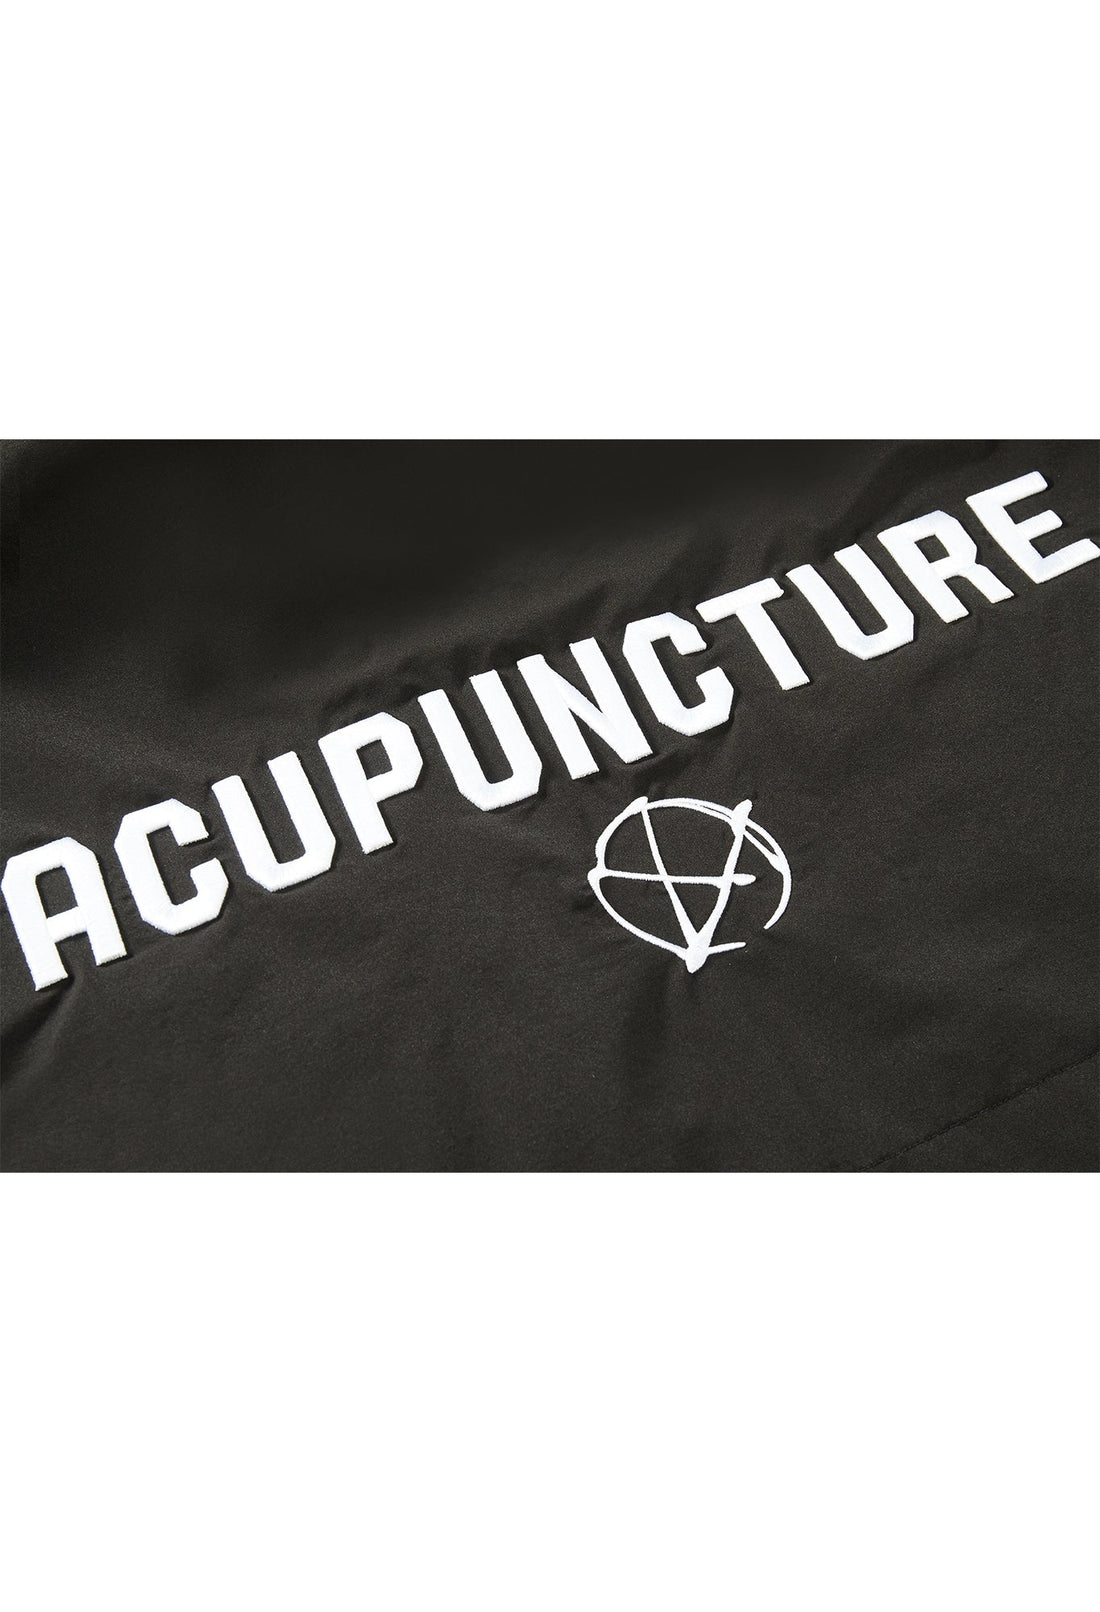 EVOLVE JACKET BLACK Acupuncture